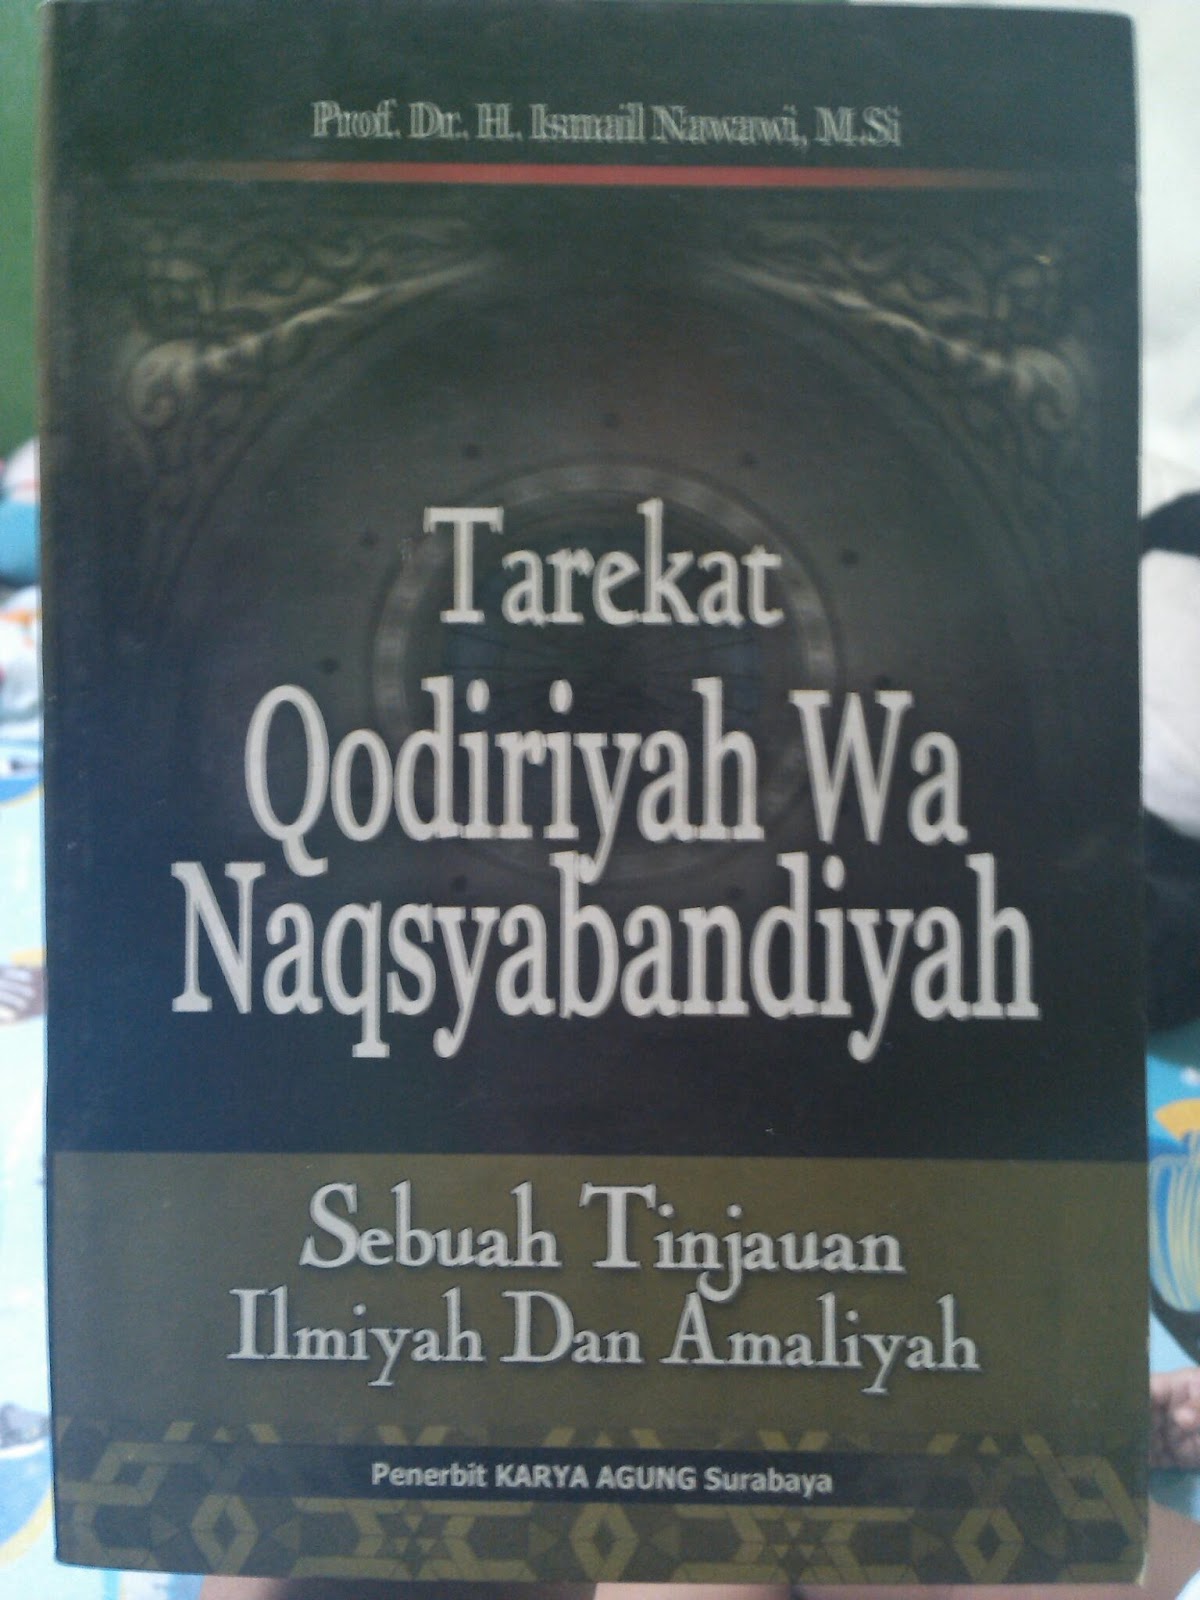 Toko Buku Jagad Ilmu: Tarekat Qodiriyah Wa Naqsyabandiyah